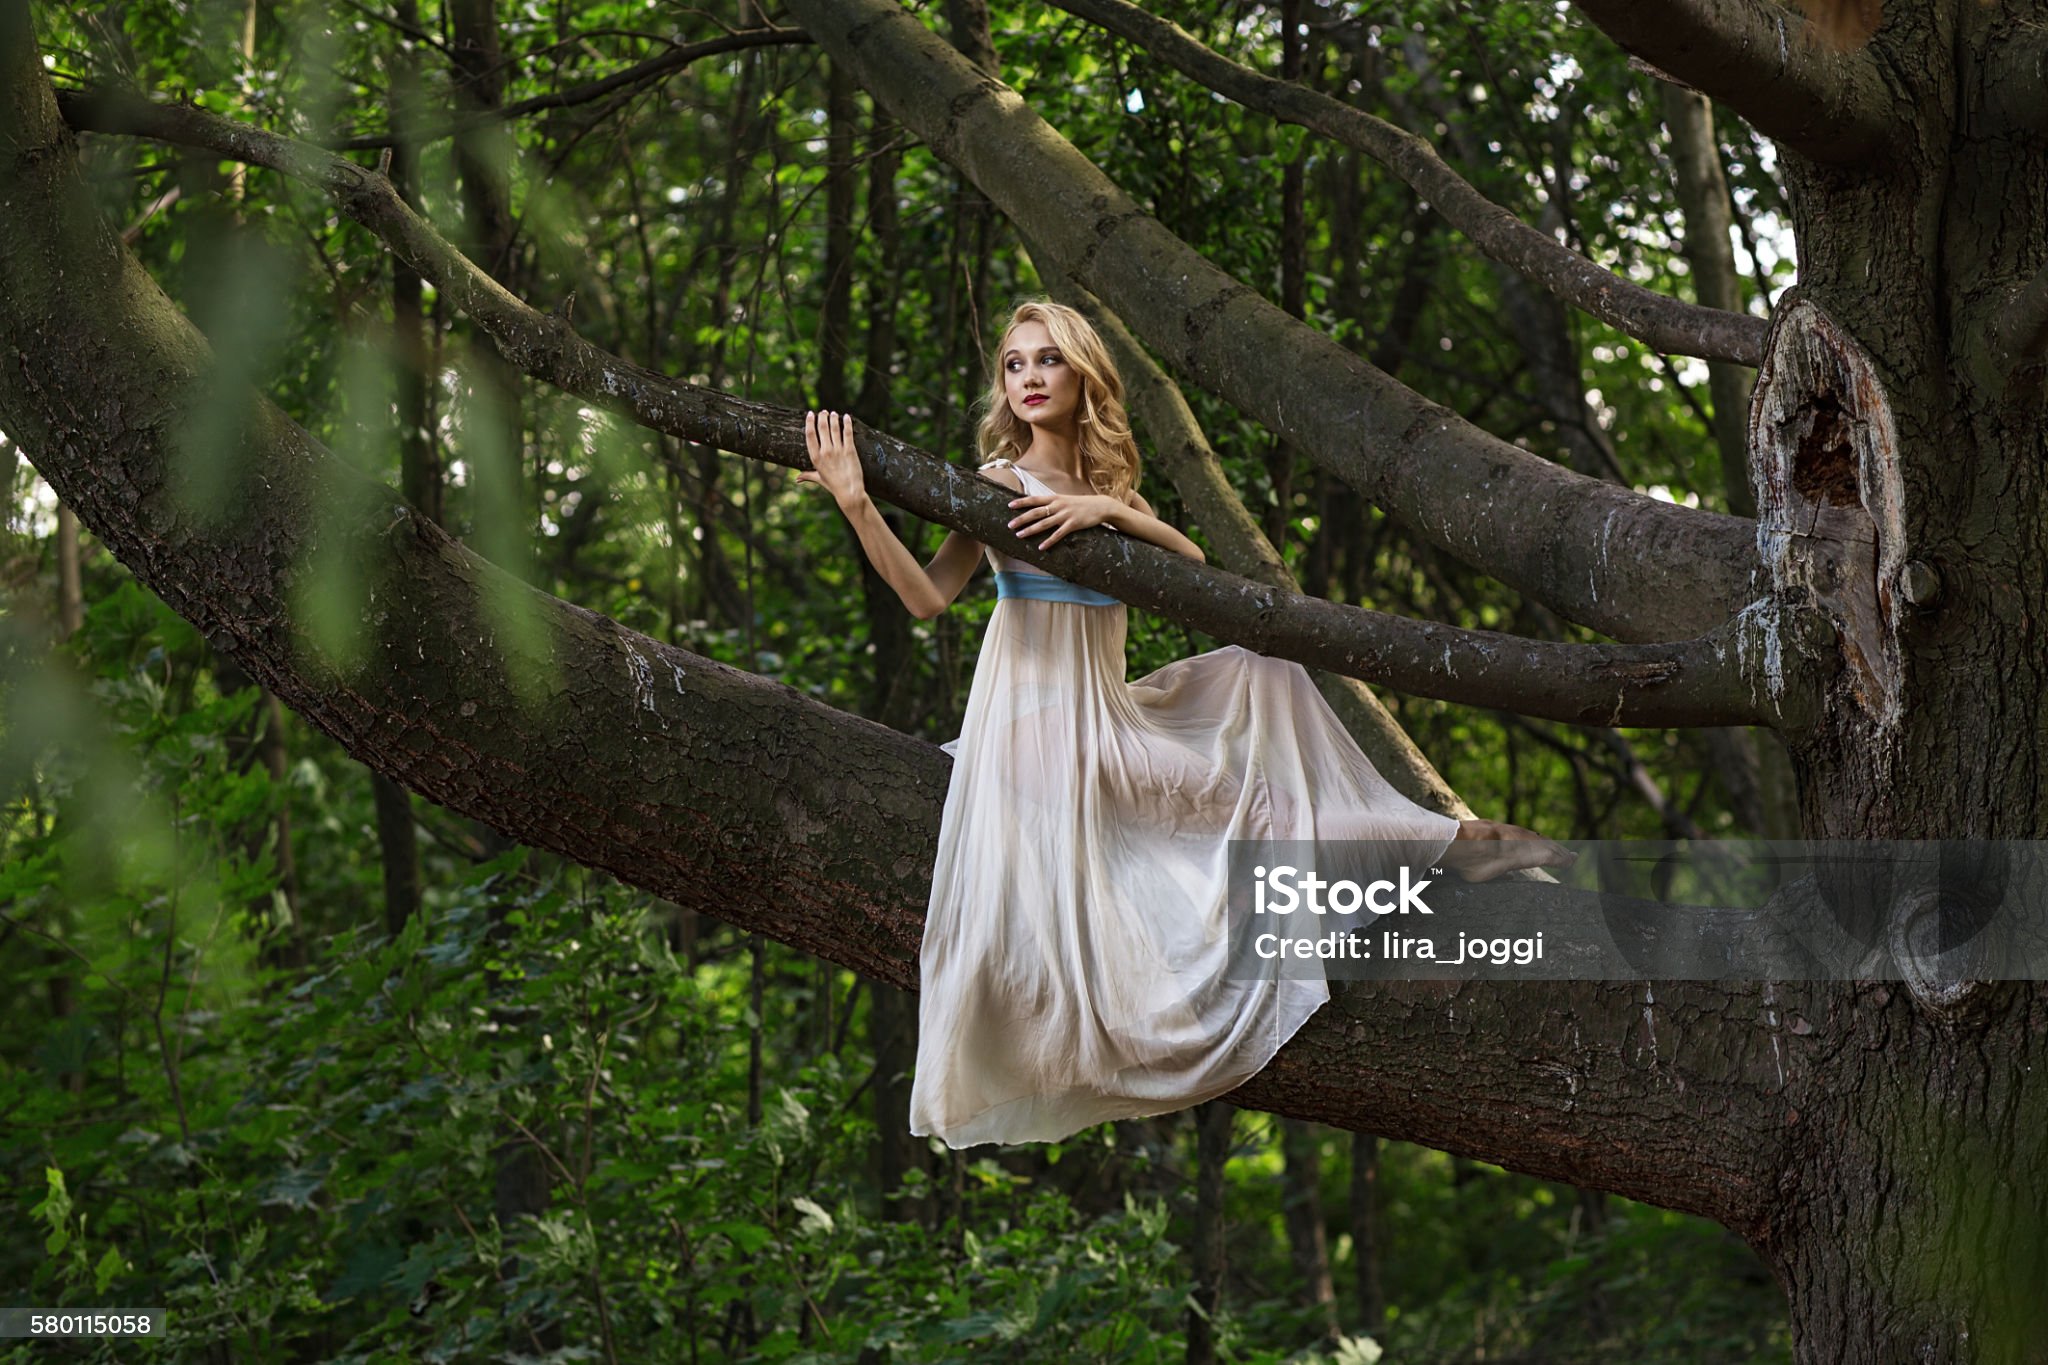 https://media.istockphoto.com/id/580115058/photo/ballerina-sitting-on-a-big-tree-in-summer-park.jpg?s=2048x2048&amp;w=is&amp;k=20&amp;c=g1EYKFfOV20gkxomS53okA6MbJJzquPyTRriU6o9-Oo=